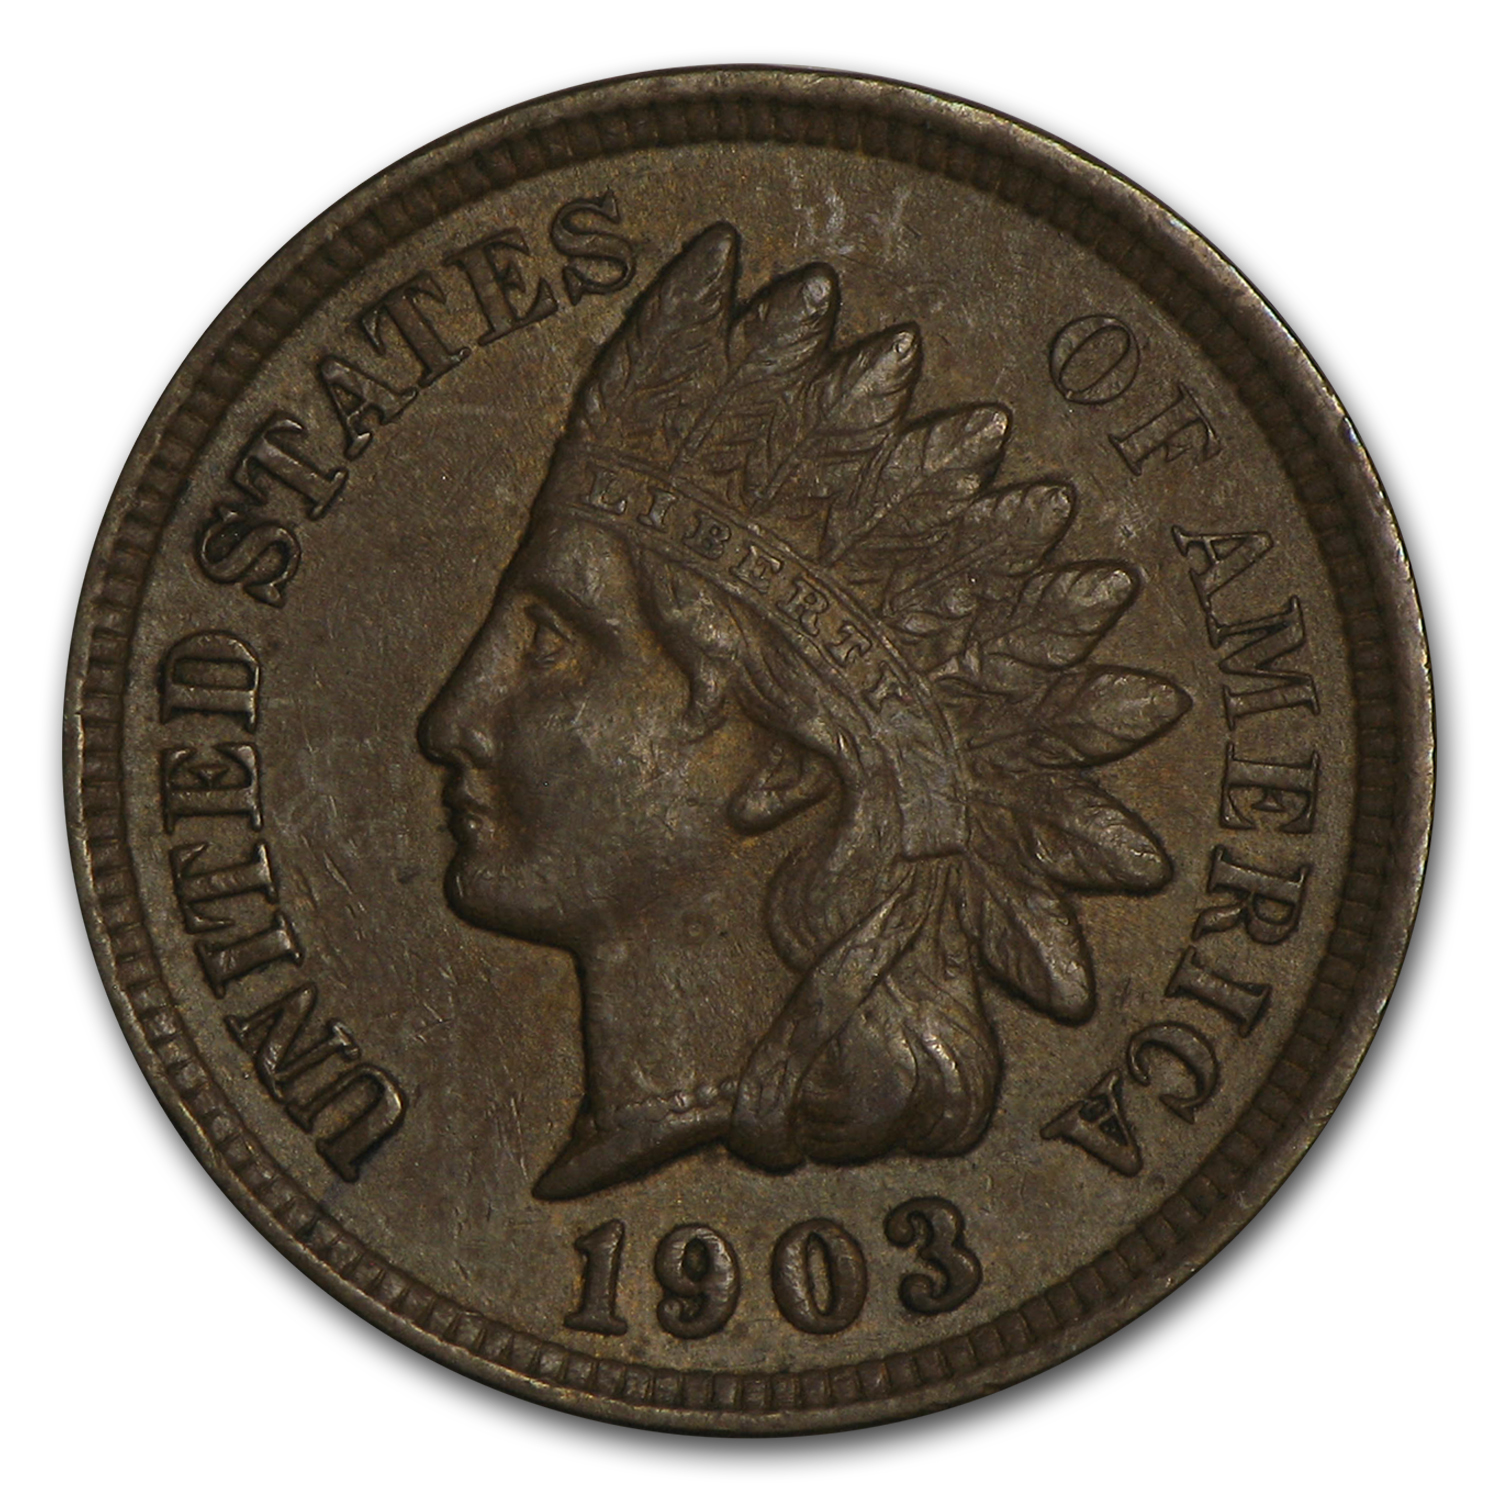 Buy 1903 Indian Head Cent AU